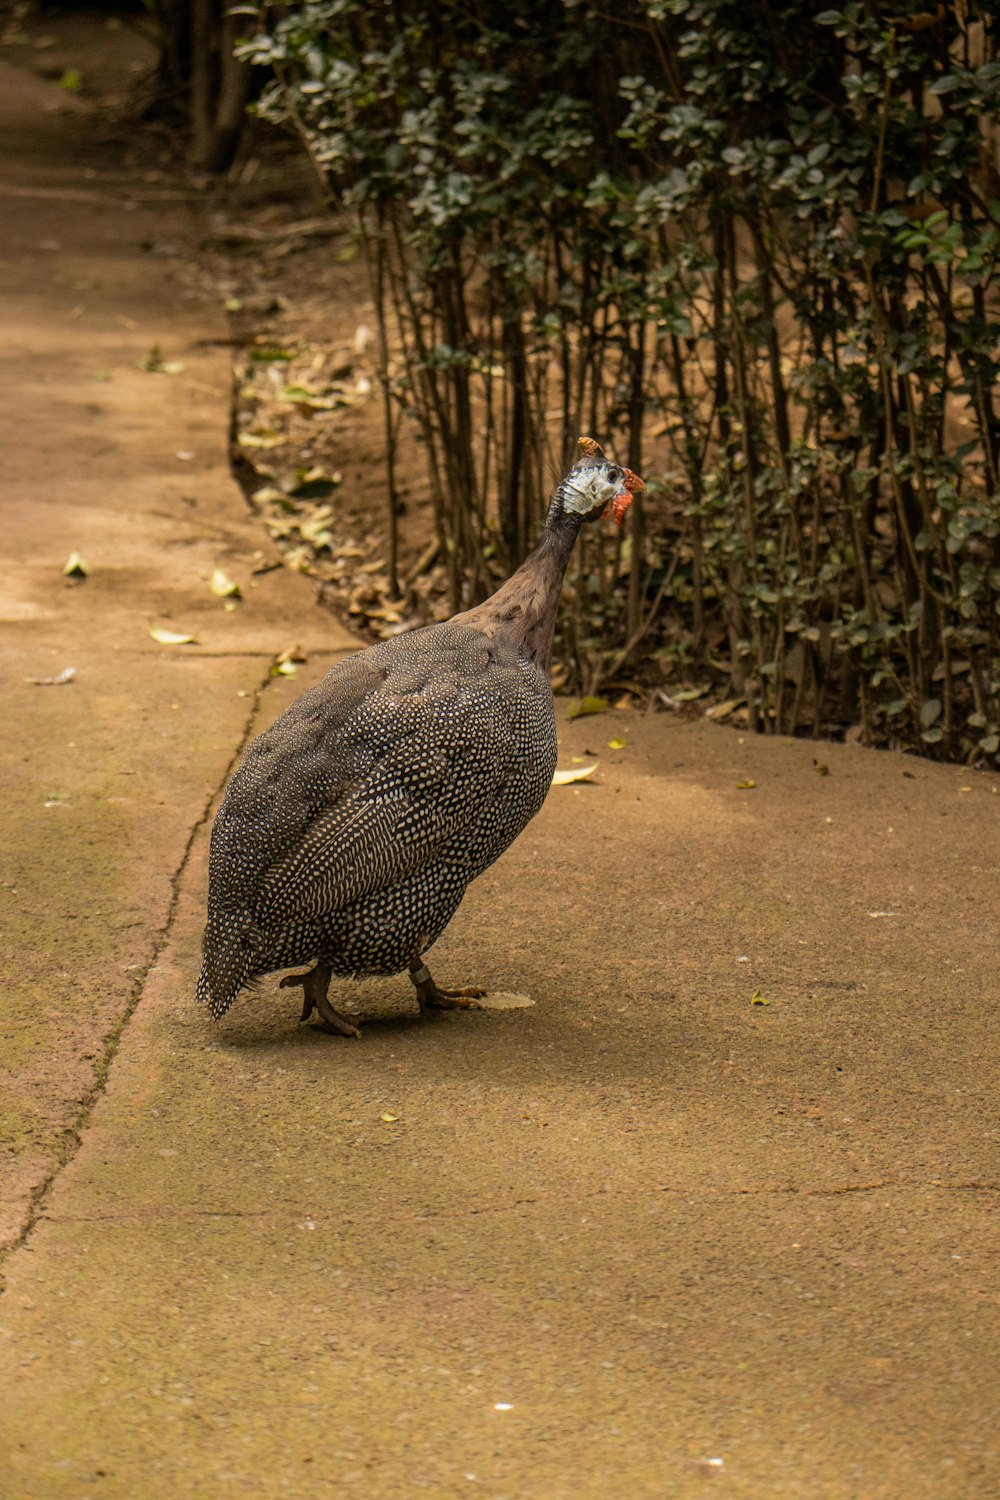 a bird that is standing on a sidewalk